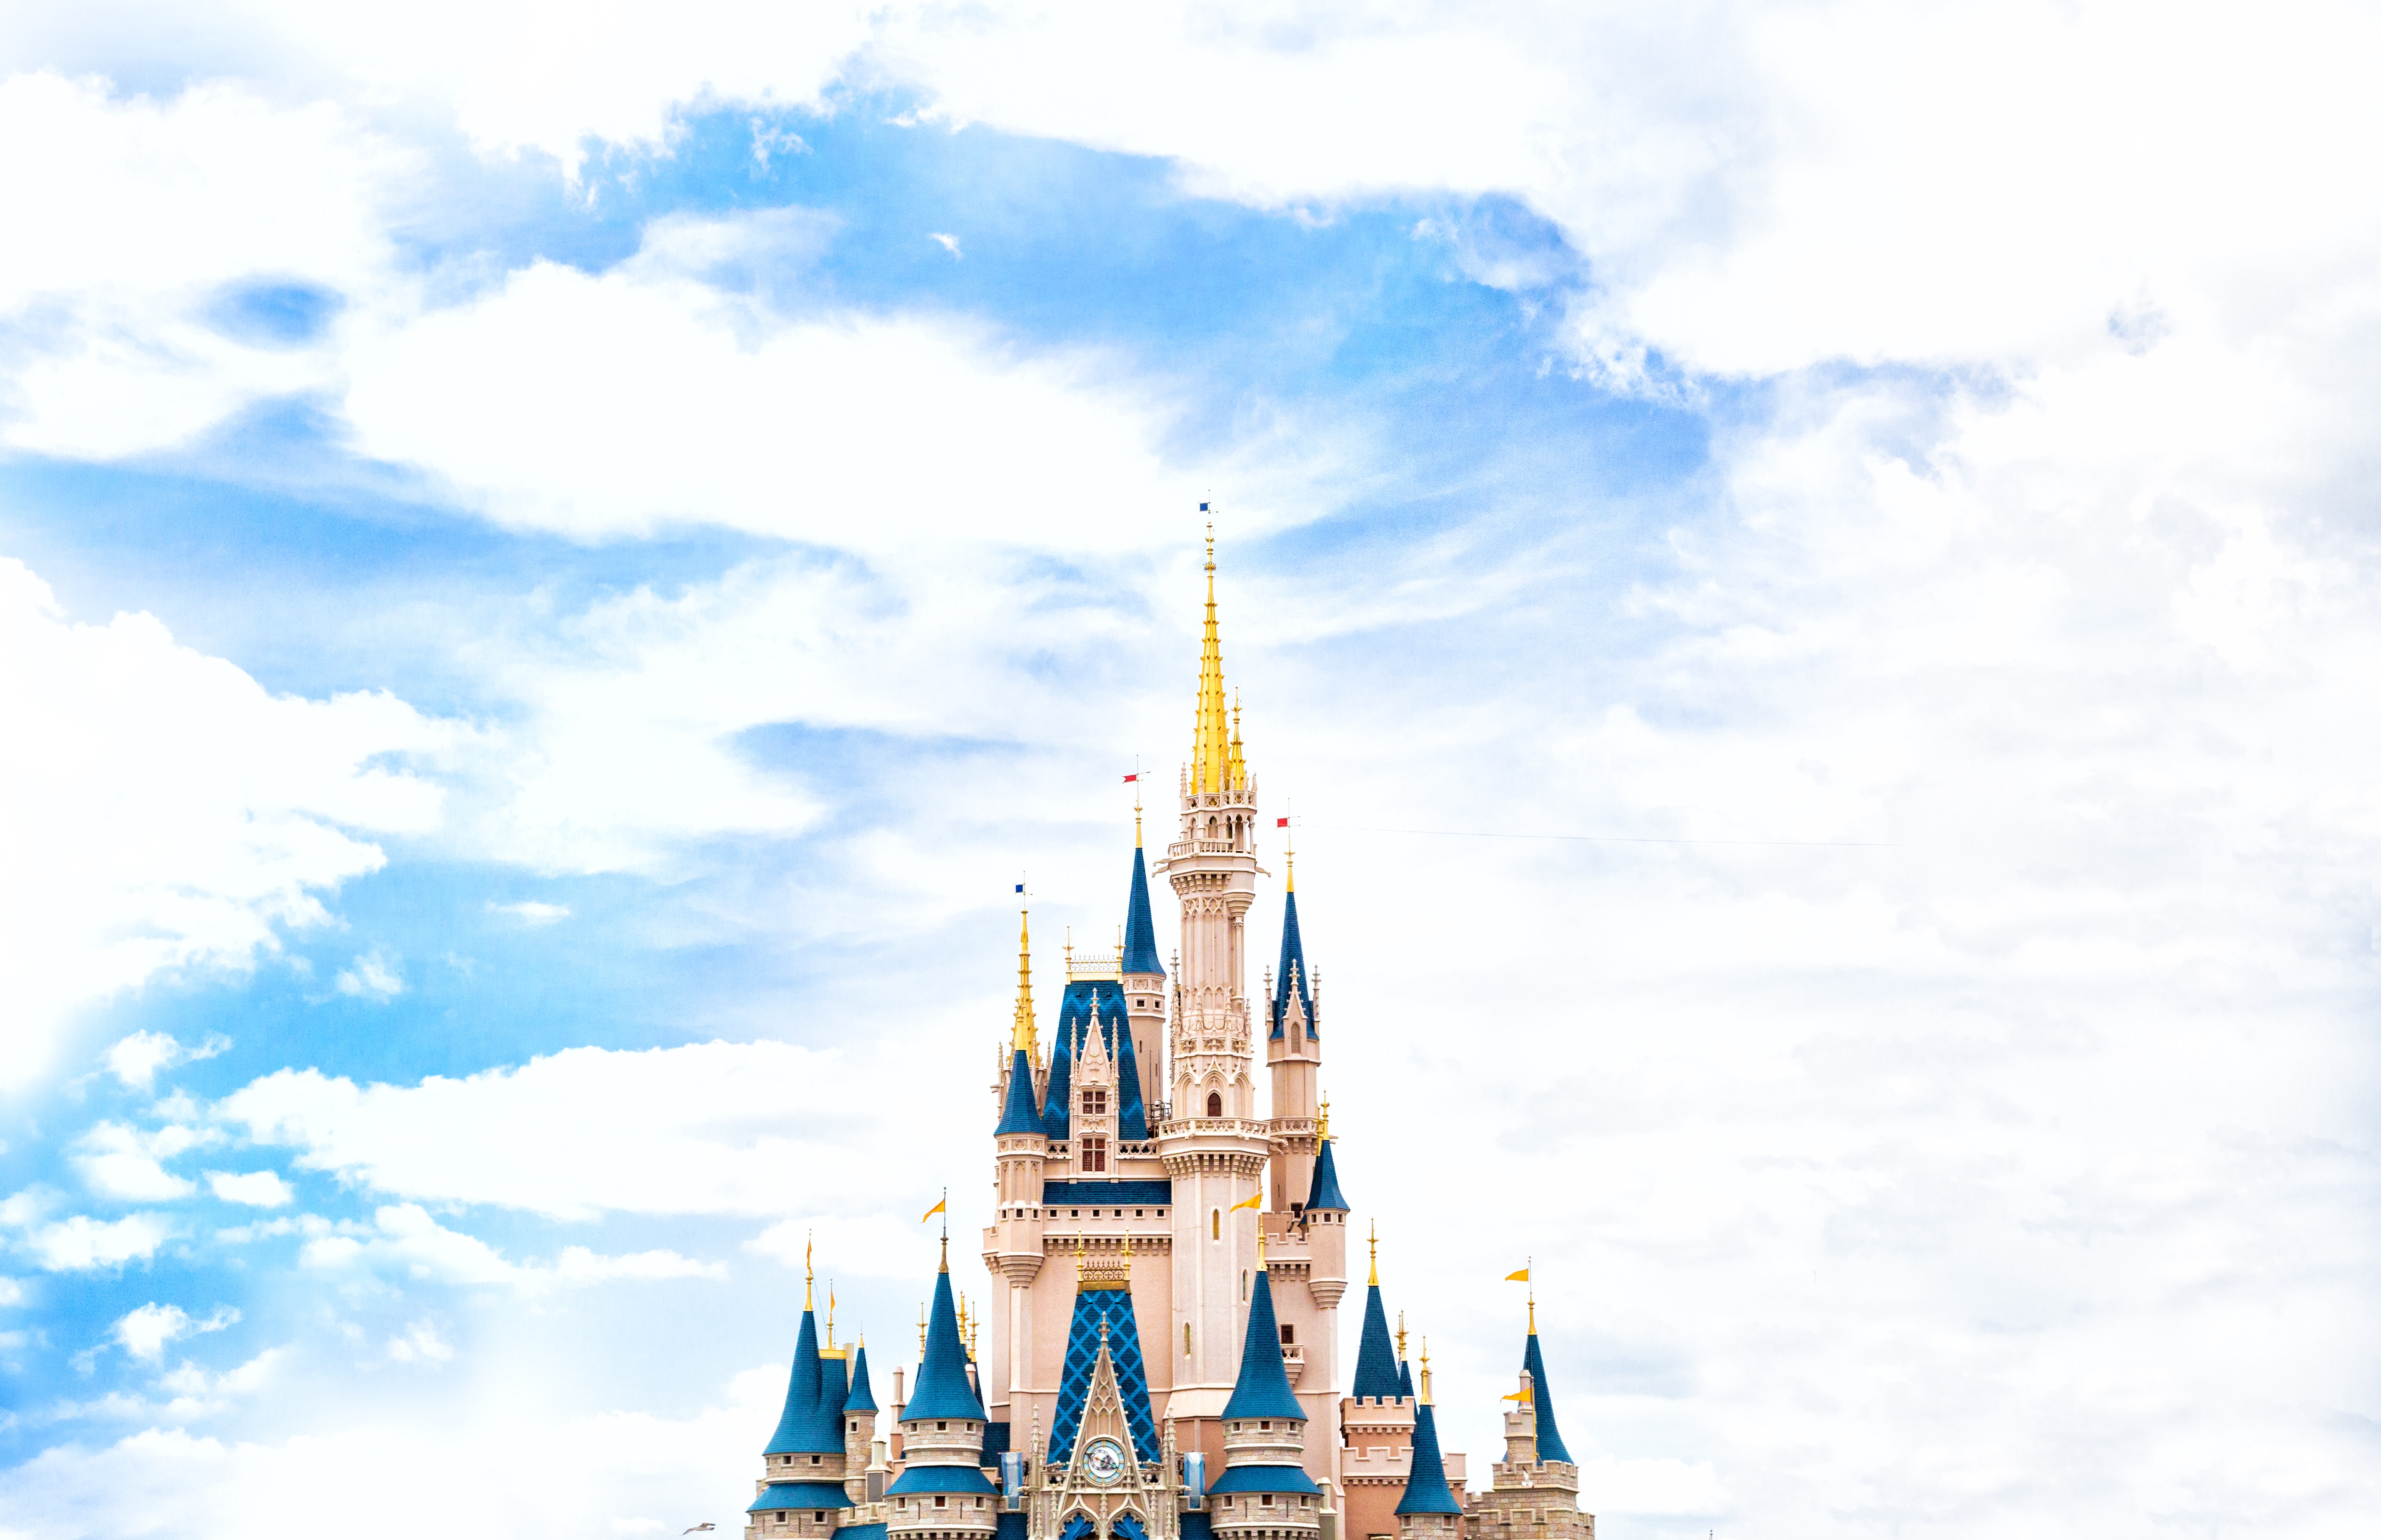 Disneyworld castle blue skies